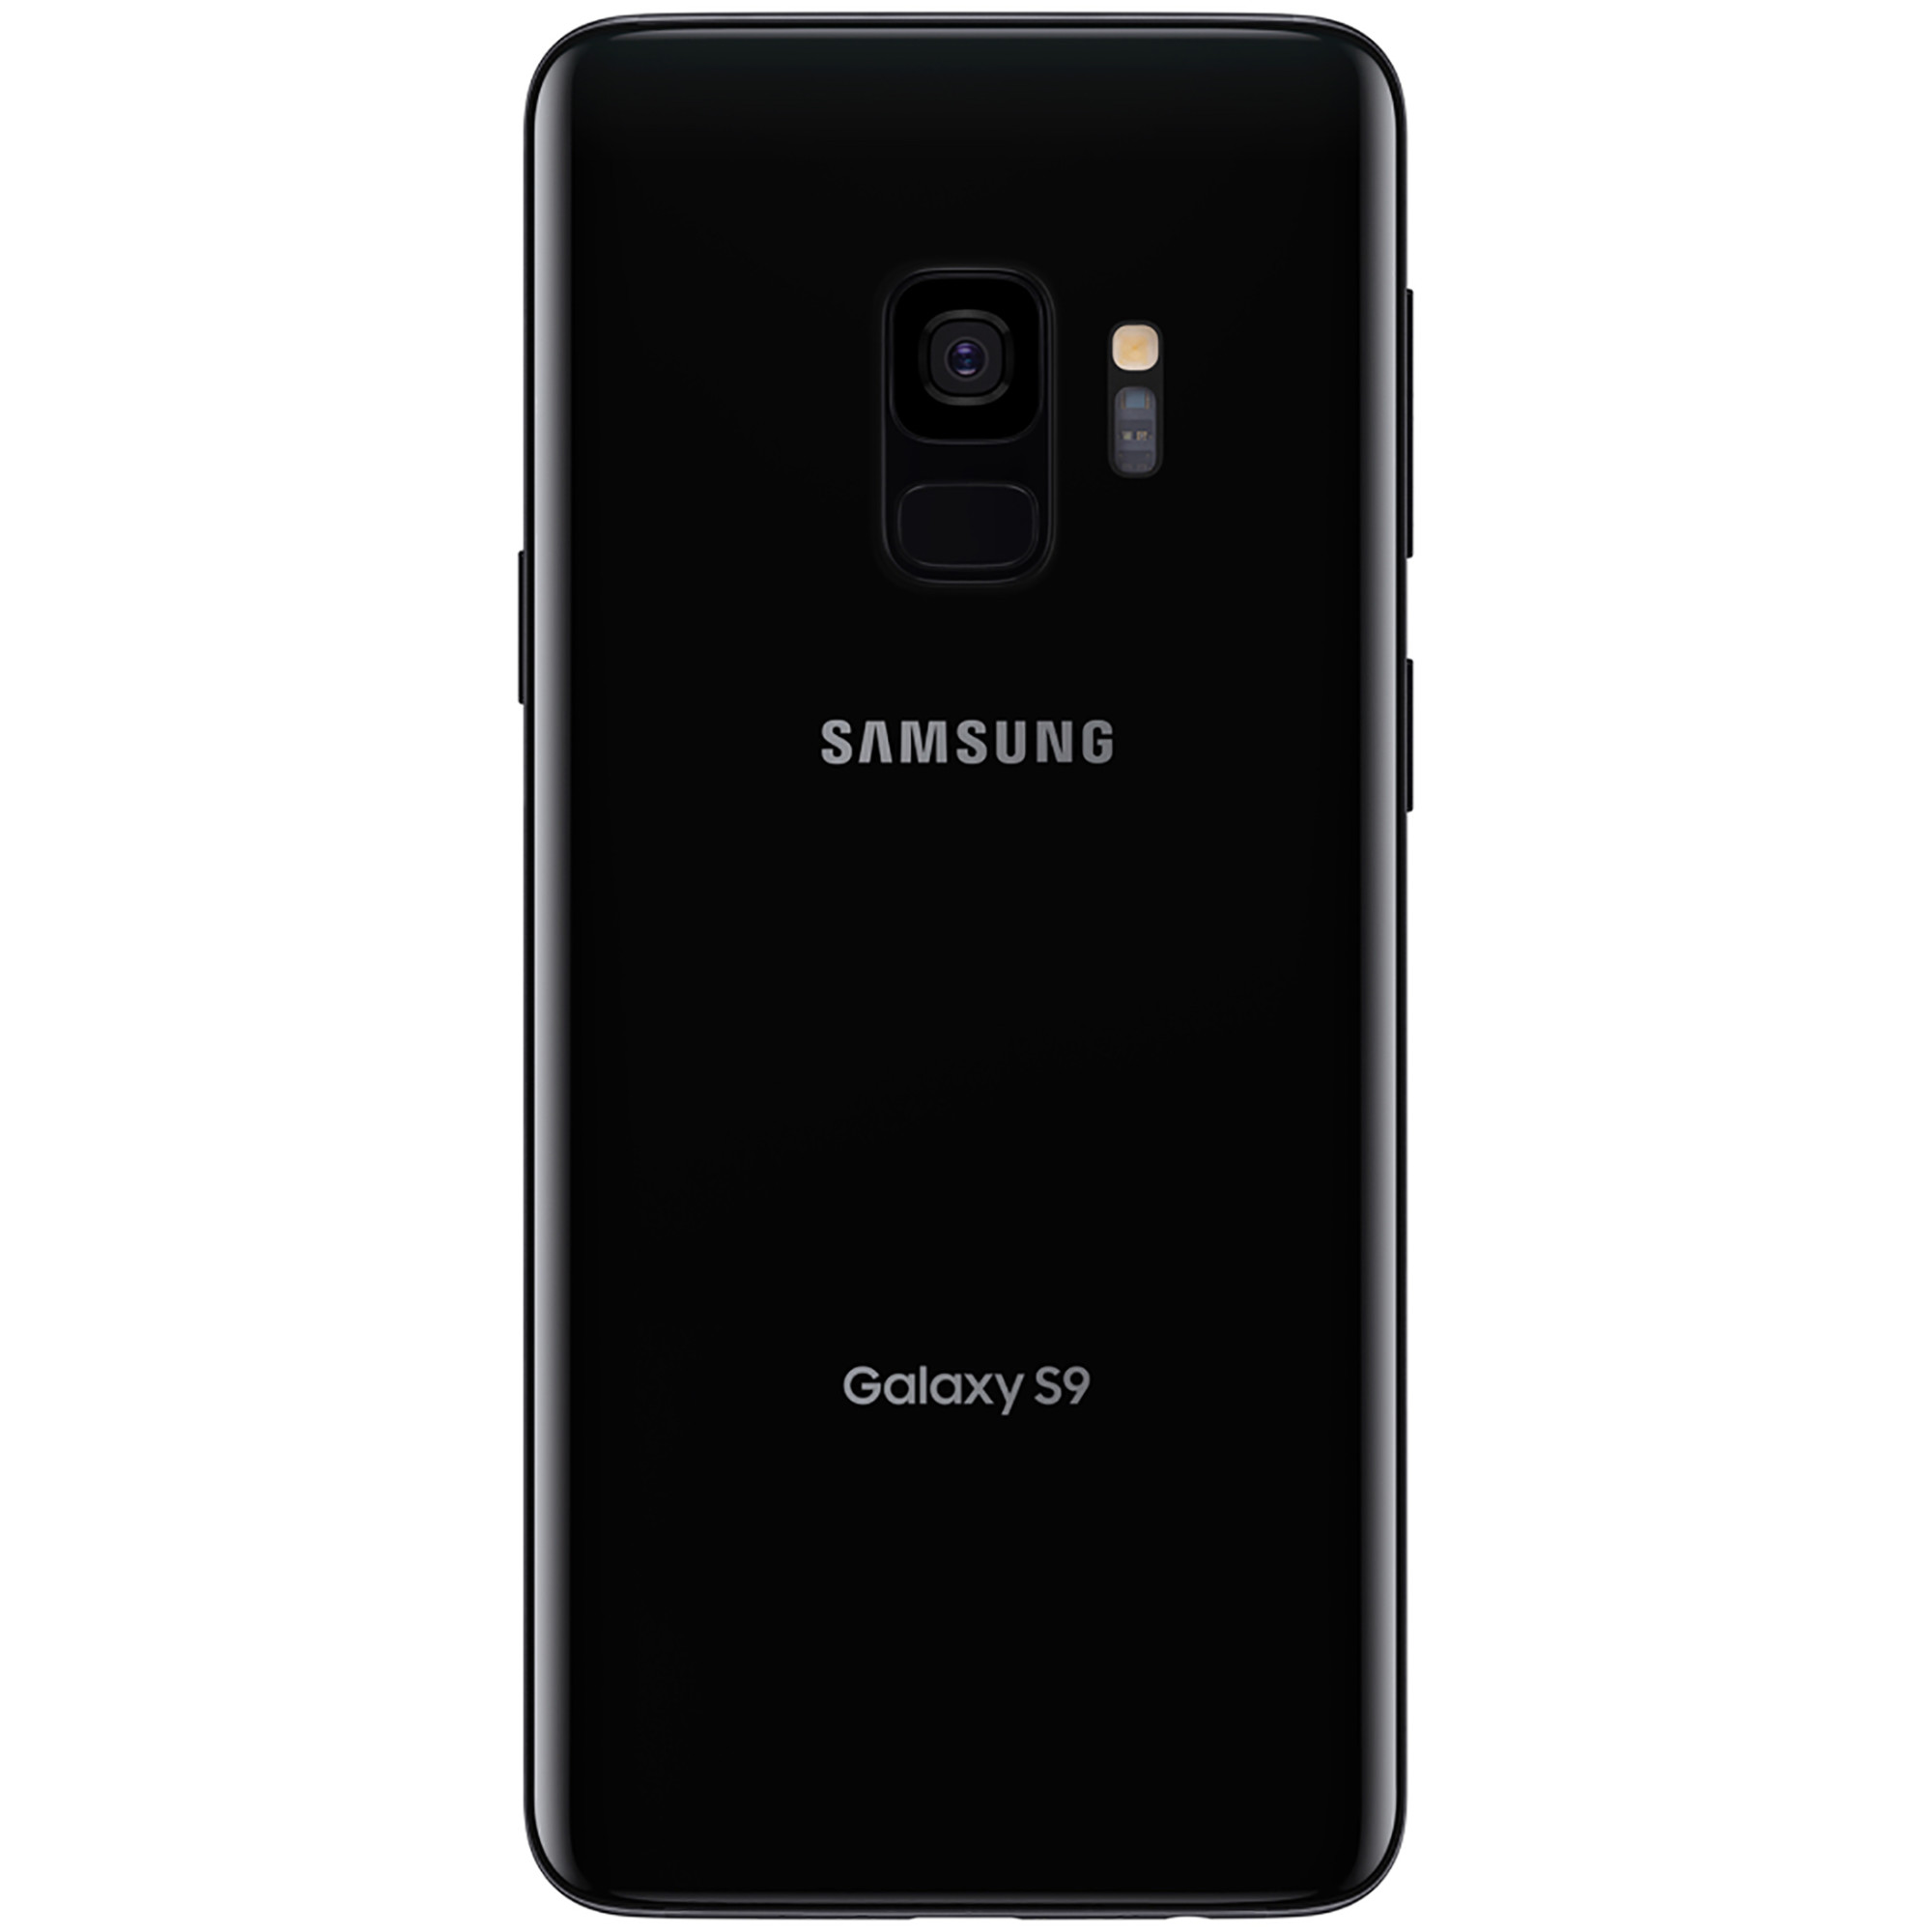 SAMSUNG Unlocked Galaxy S9, 64GB Black - Smartphone - image 3 of 4